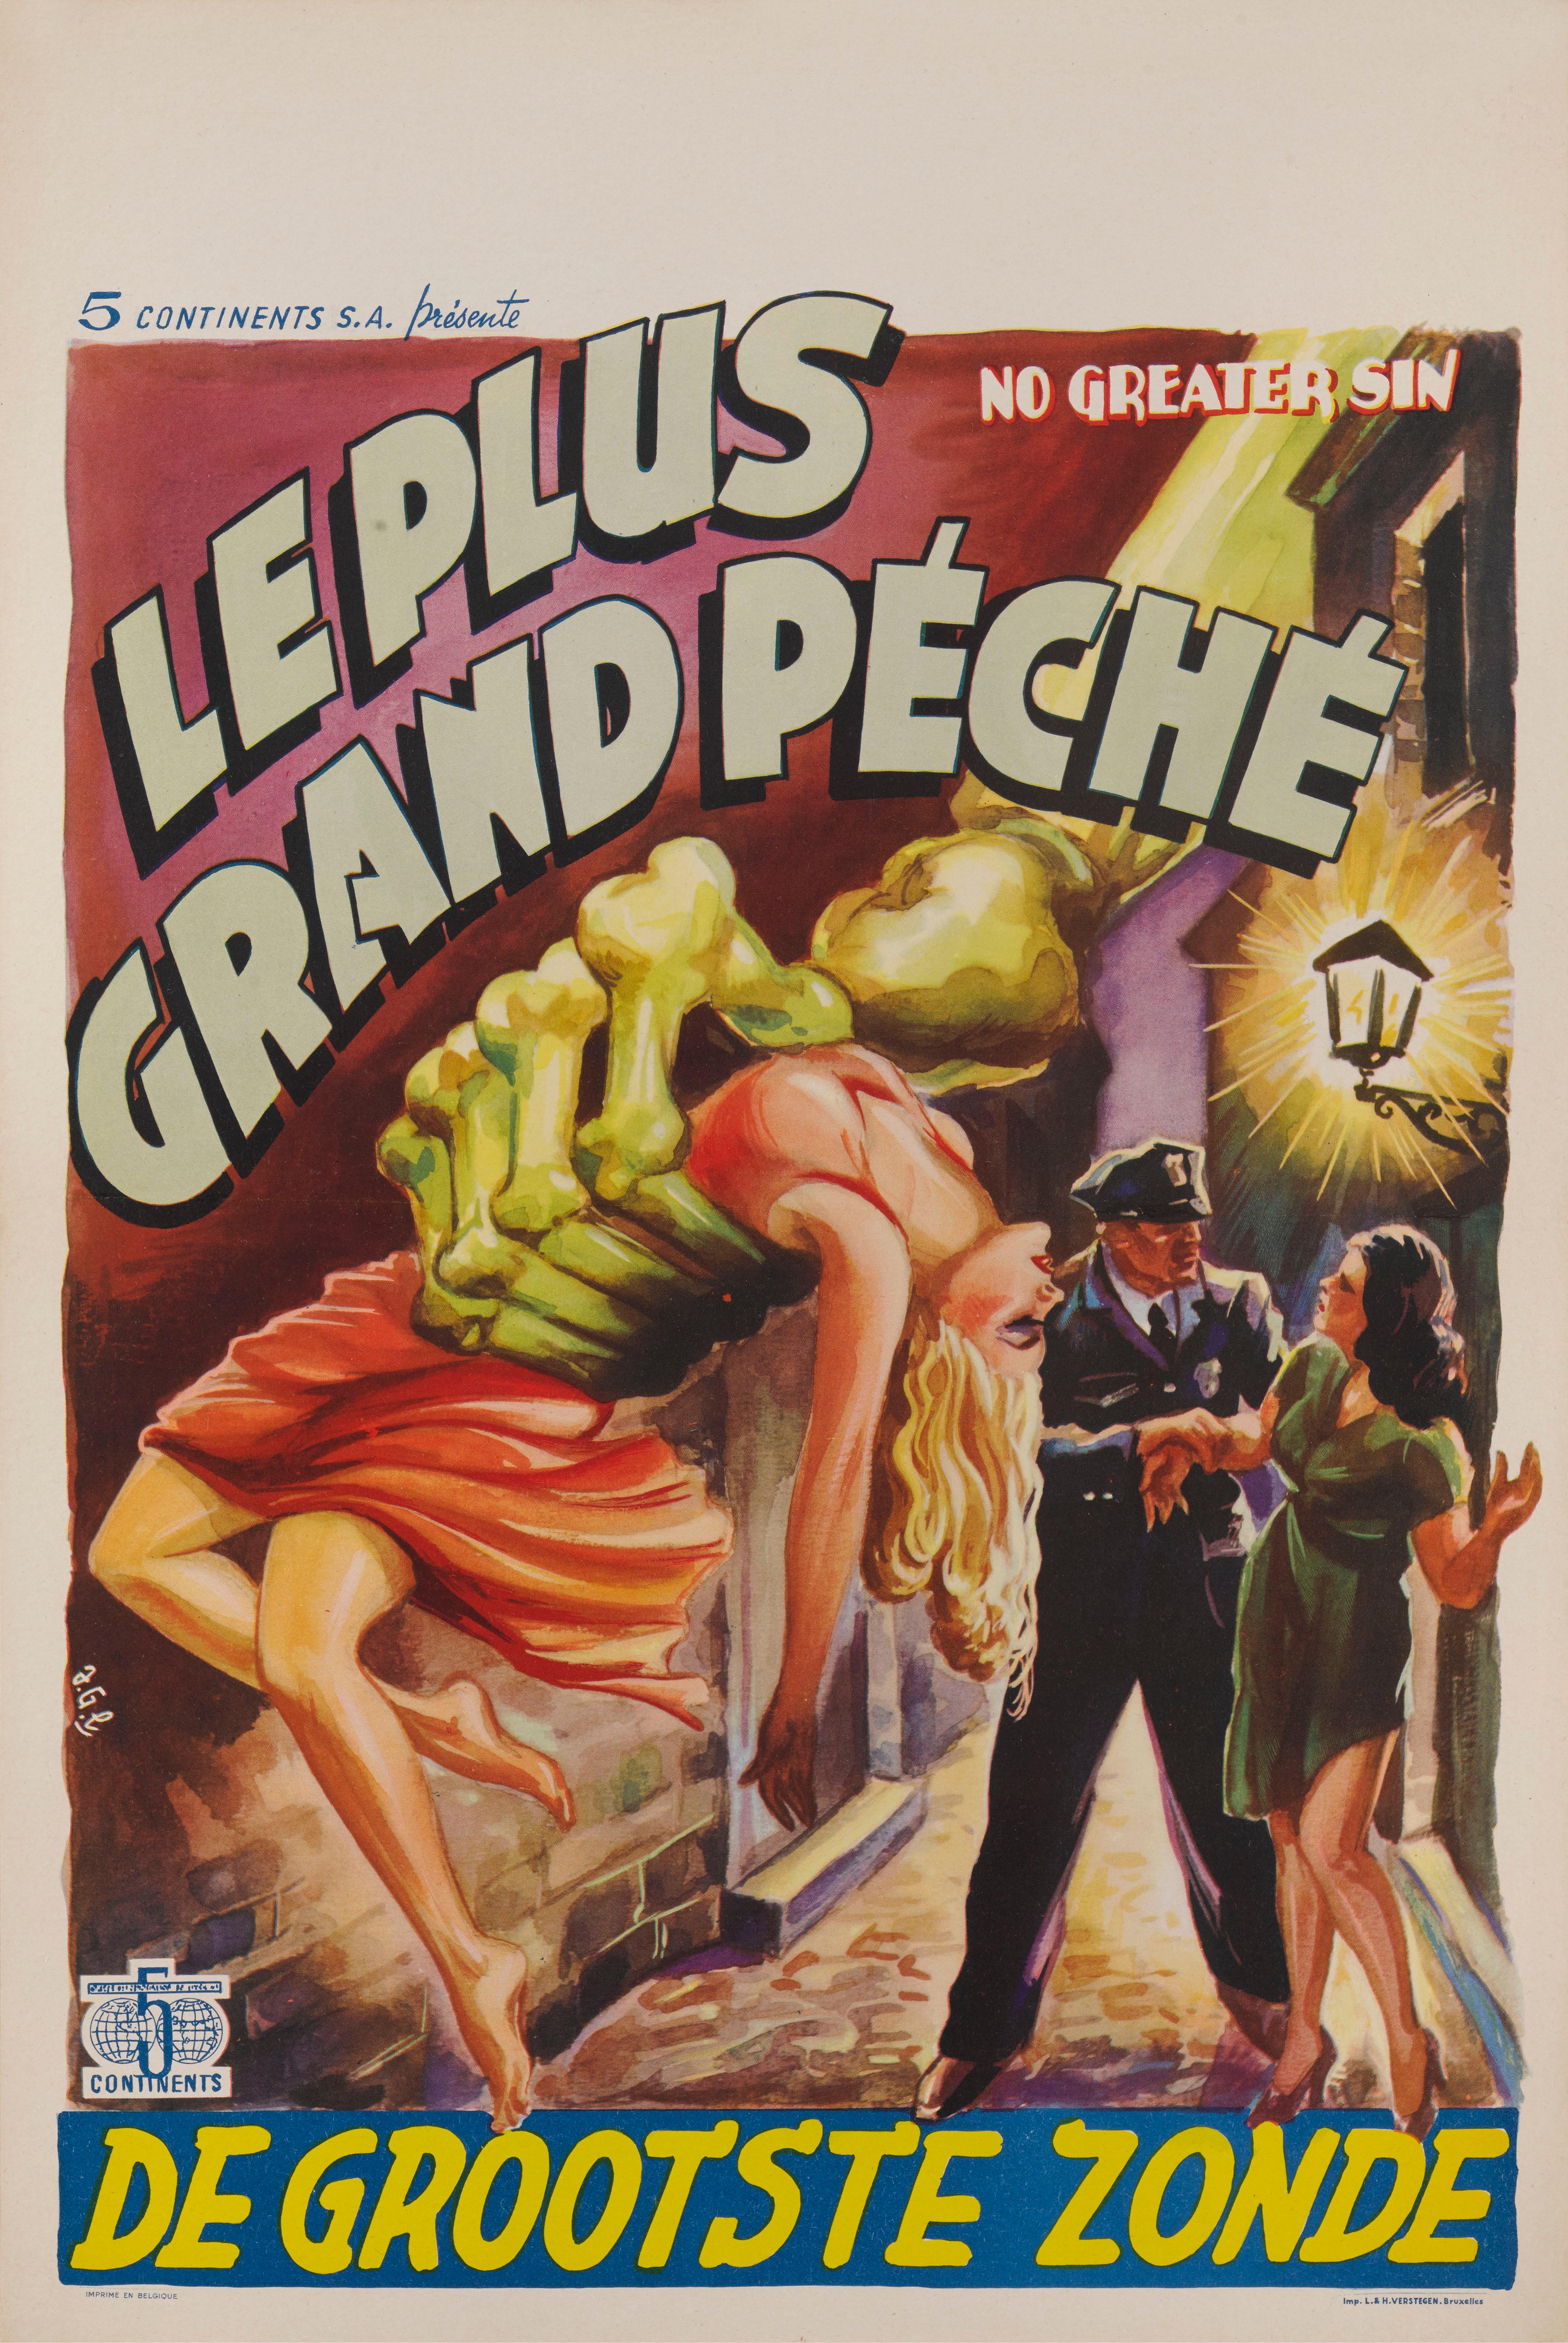 Le Plus Grand Peche: „No Greater Sin oder Le Plus Grand Peche“ (Belgisch) im Angebot